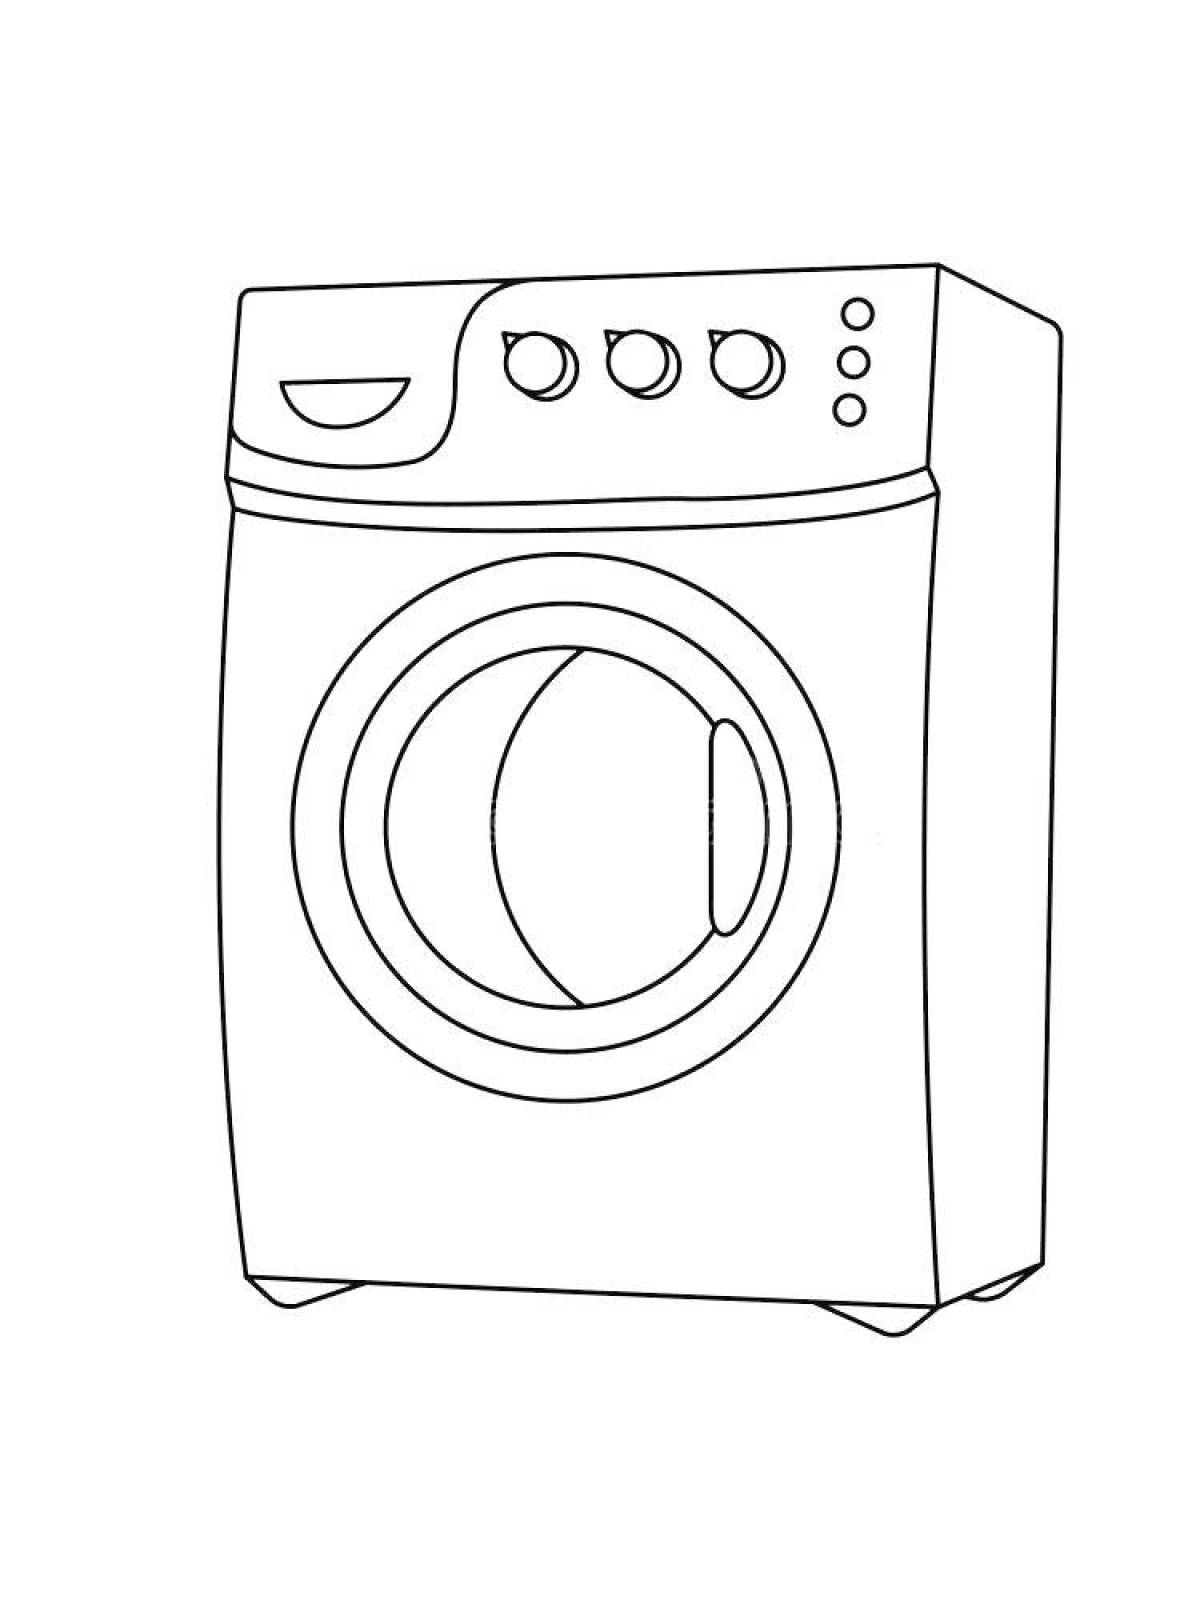 Playful washing machine coloring page